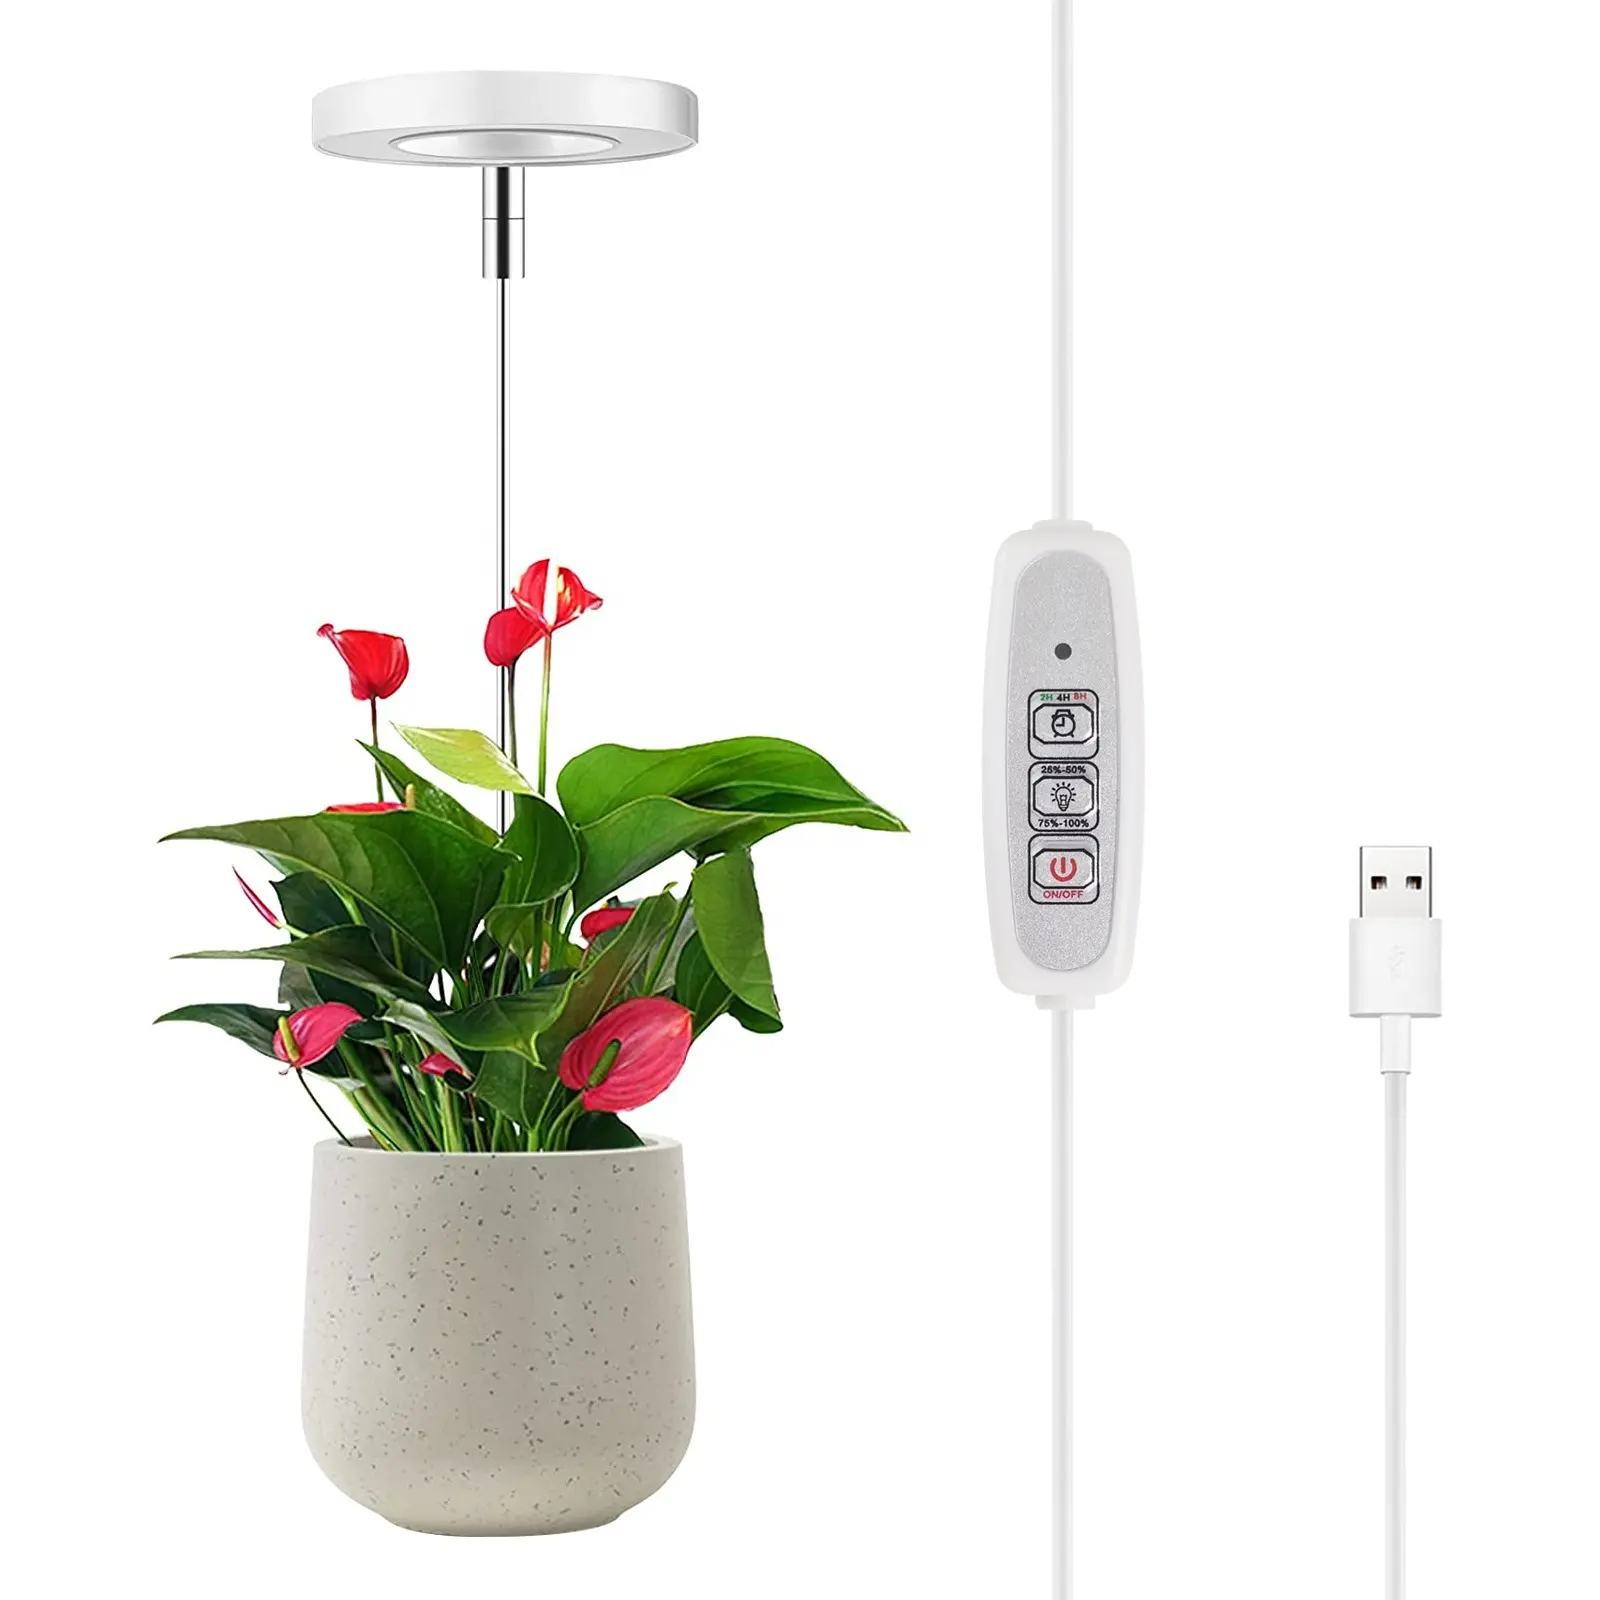 Liweida 5V 높이 조절 실내 천사 반지 성장 빛 자동 타이머 전체 스펙트럼 USB 단풍 식물 성장 램프